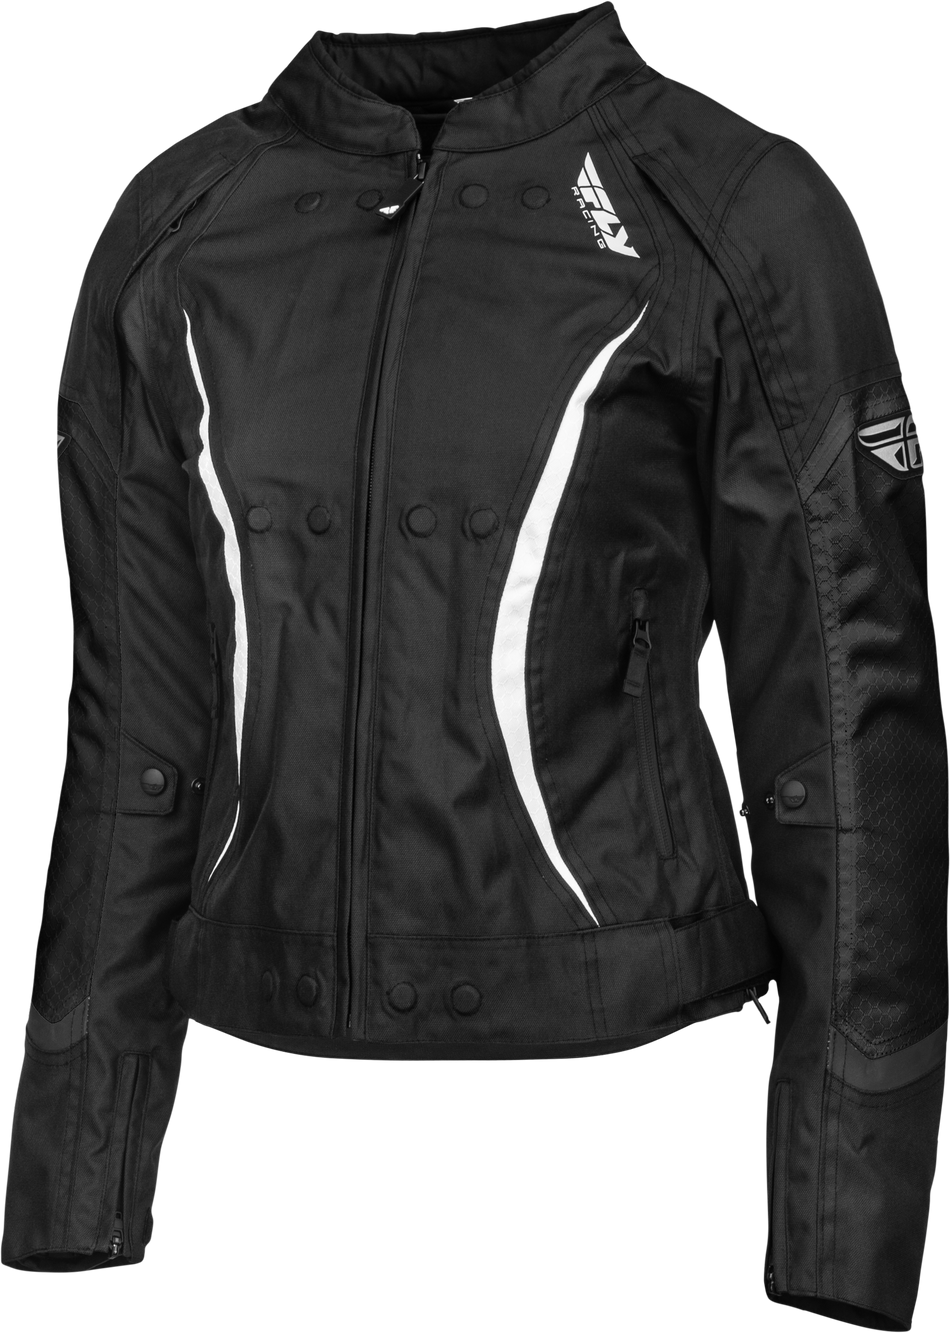 FLY RACING Women's Butane Jacket Black/White 2x 477-70422X